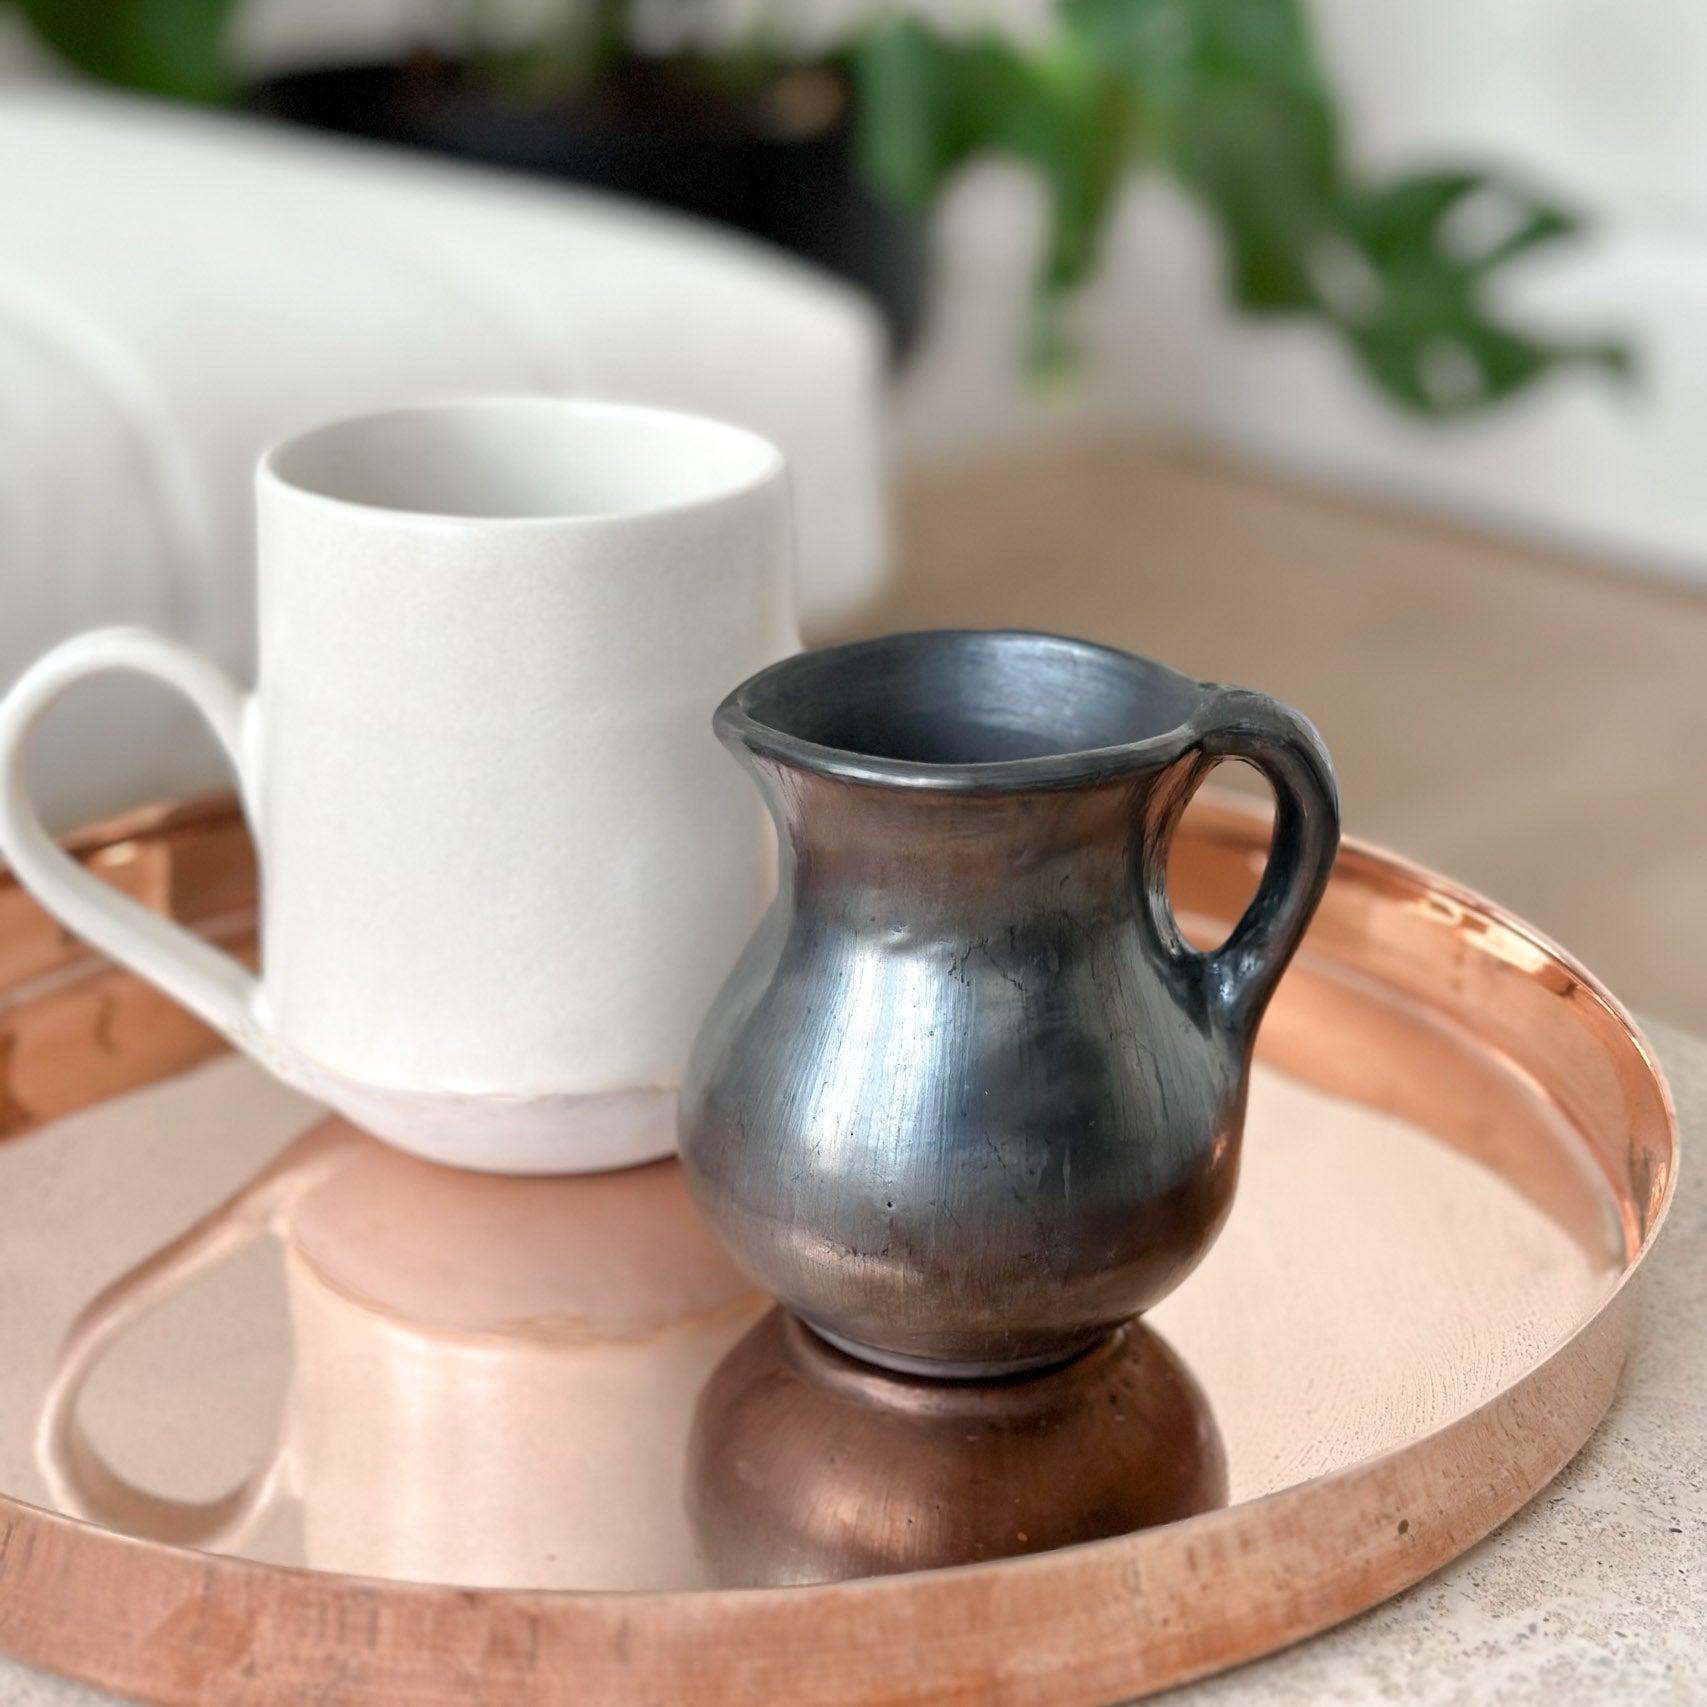 Oaxaca black clay creamer with a white mug on a copper tray.